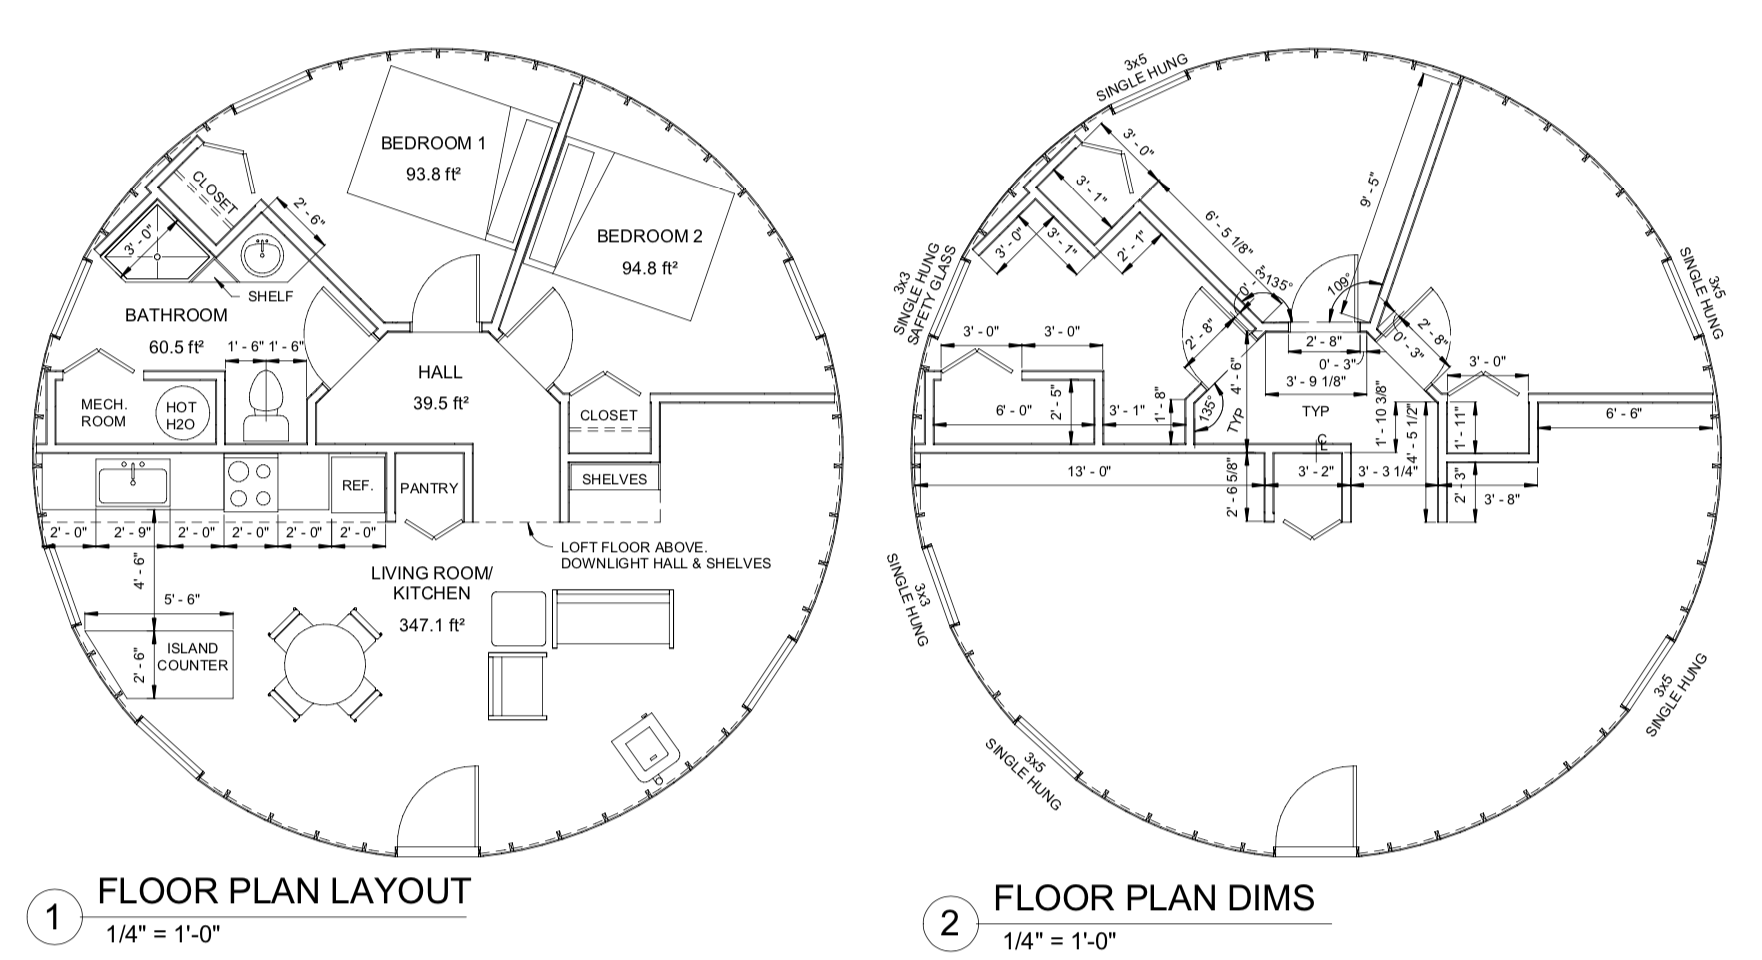 yurt floor plan and dims